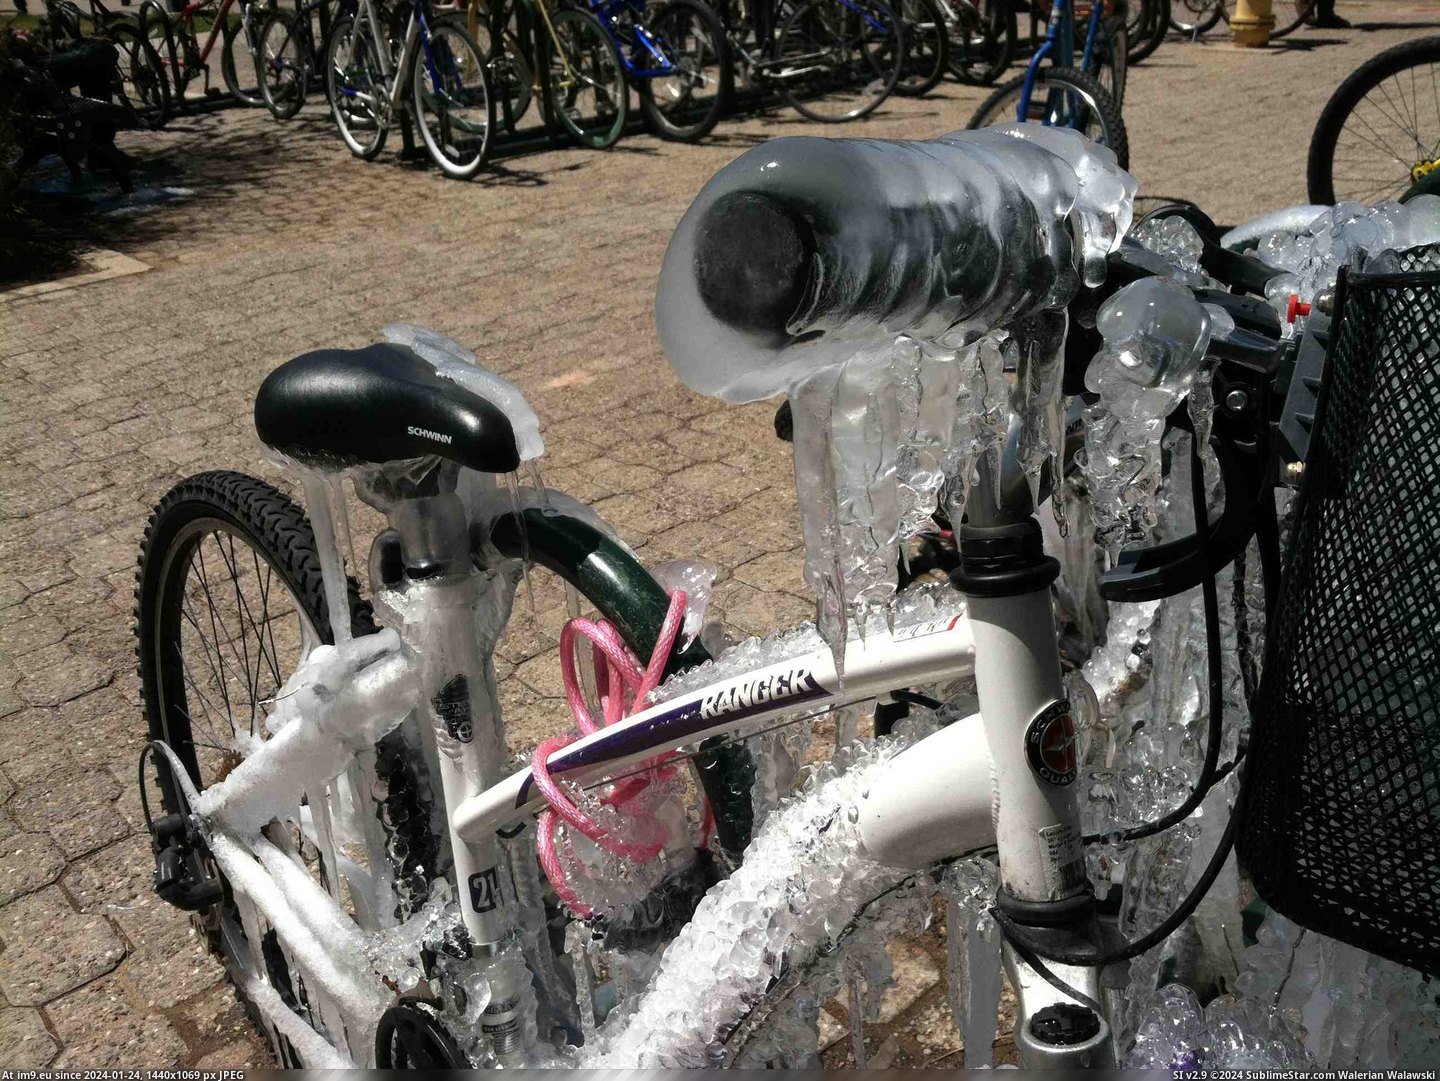 #Wtf #Bike #Temperatures #Sprinklers #Rack #Freezing [Wtf] When sprinklers come on next to the bike rack in freezing temperatures... Pic. (Изображение из альбом My r/WTF favs))